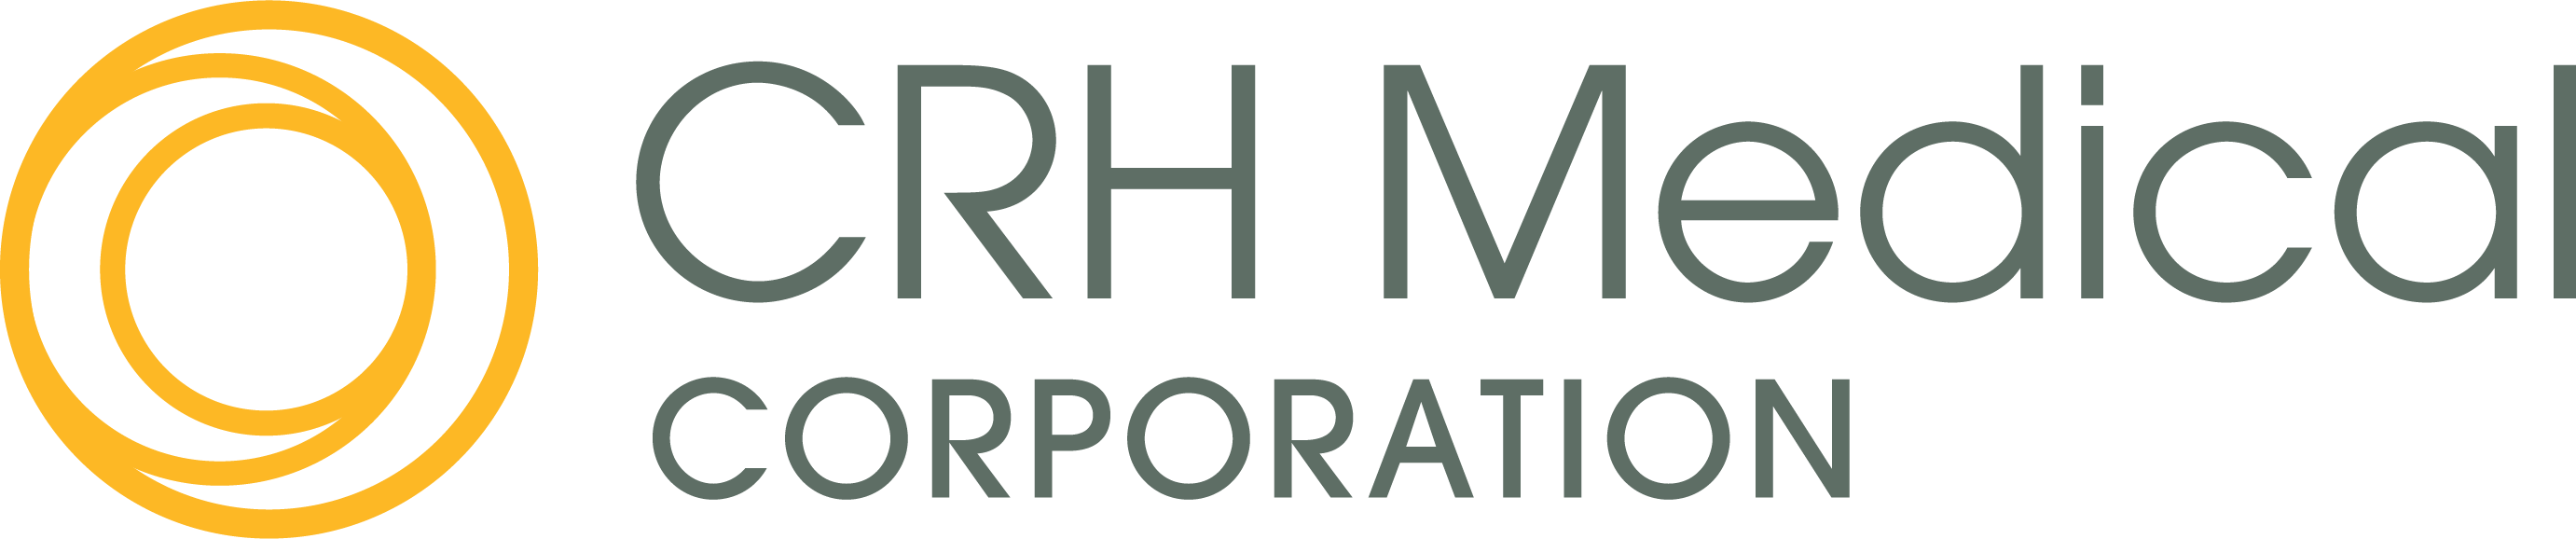 CRH Logo - CRH Medical Corporation Announces 2019 First Quarter Results